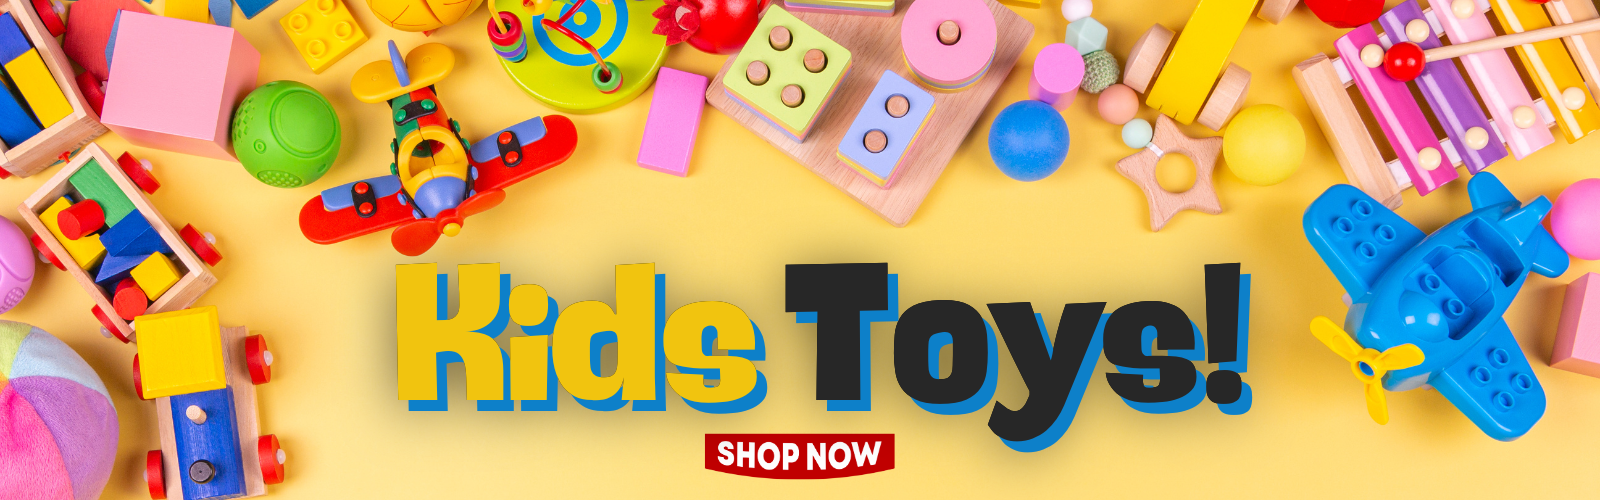 Toys banner 2